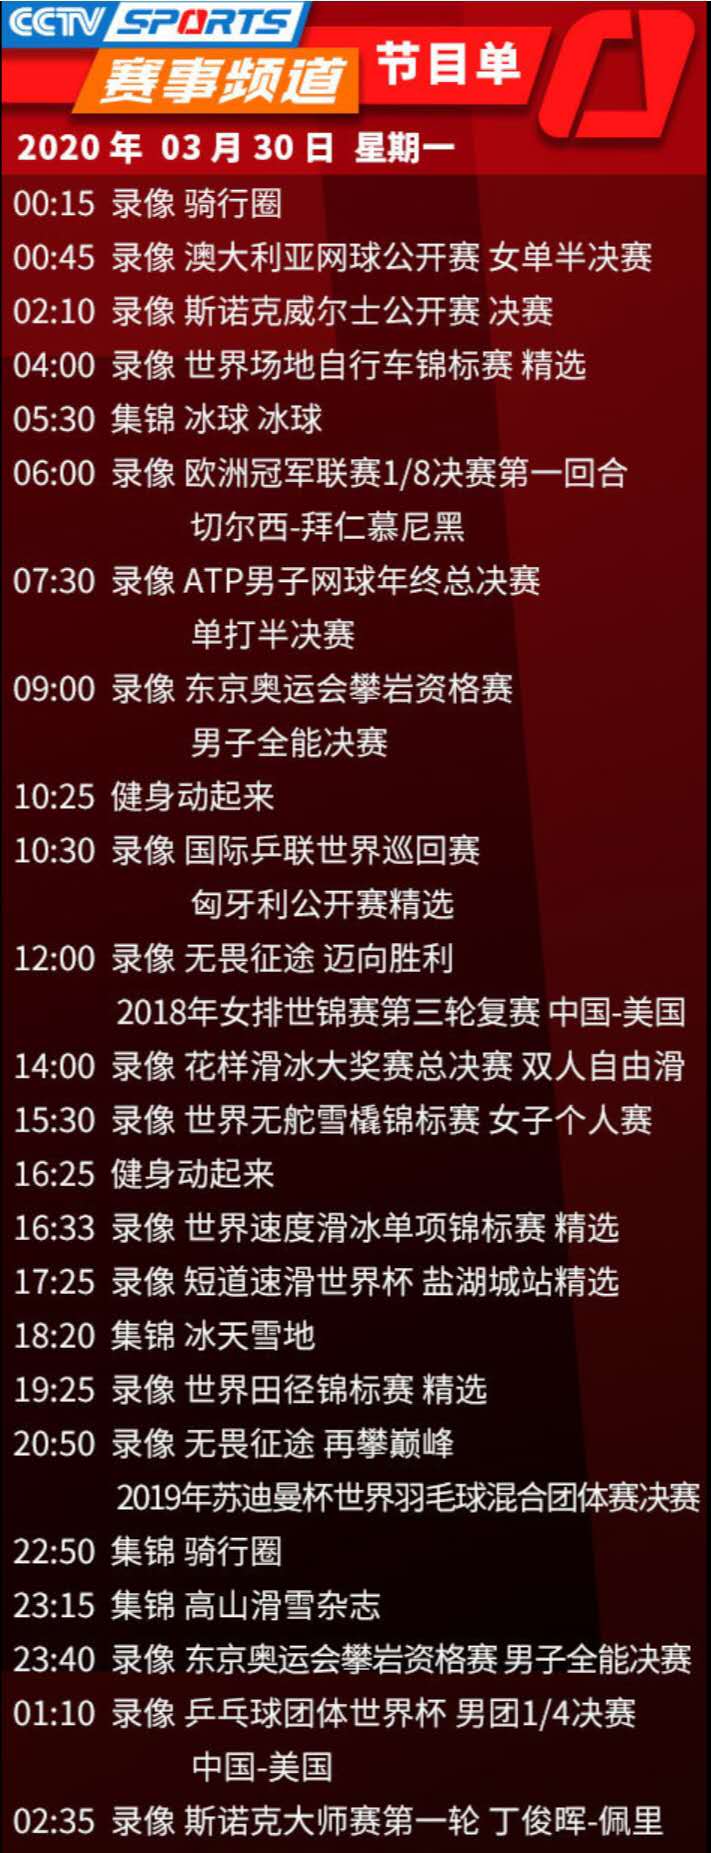 CCTV5/CCTV5+今日节目单：直播天下足球+录播中国女排